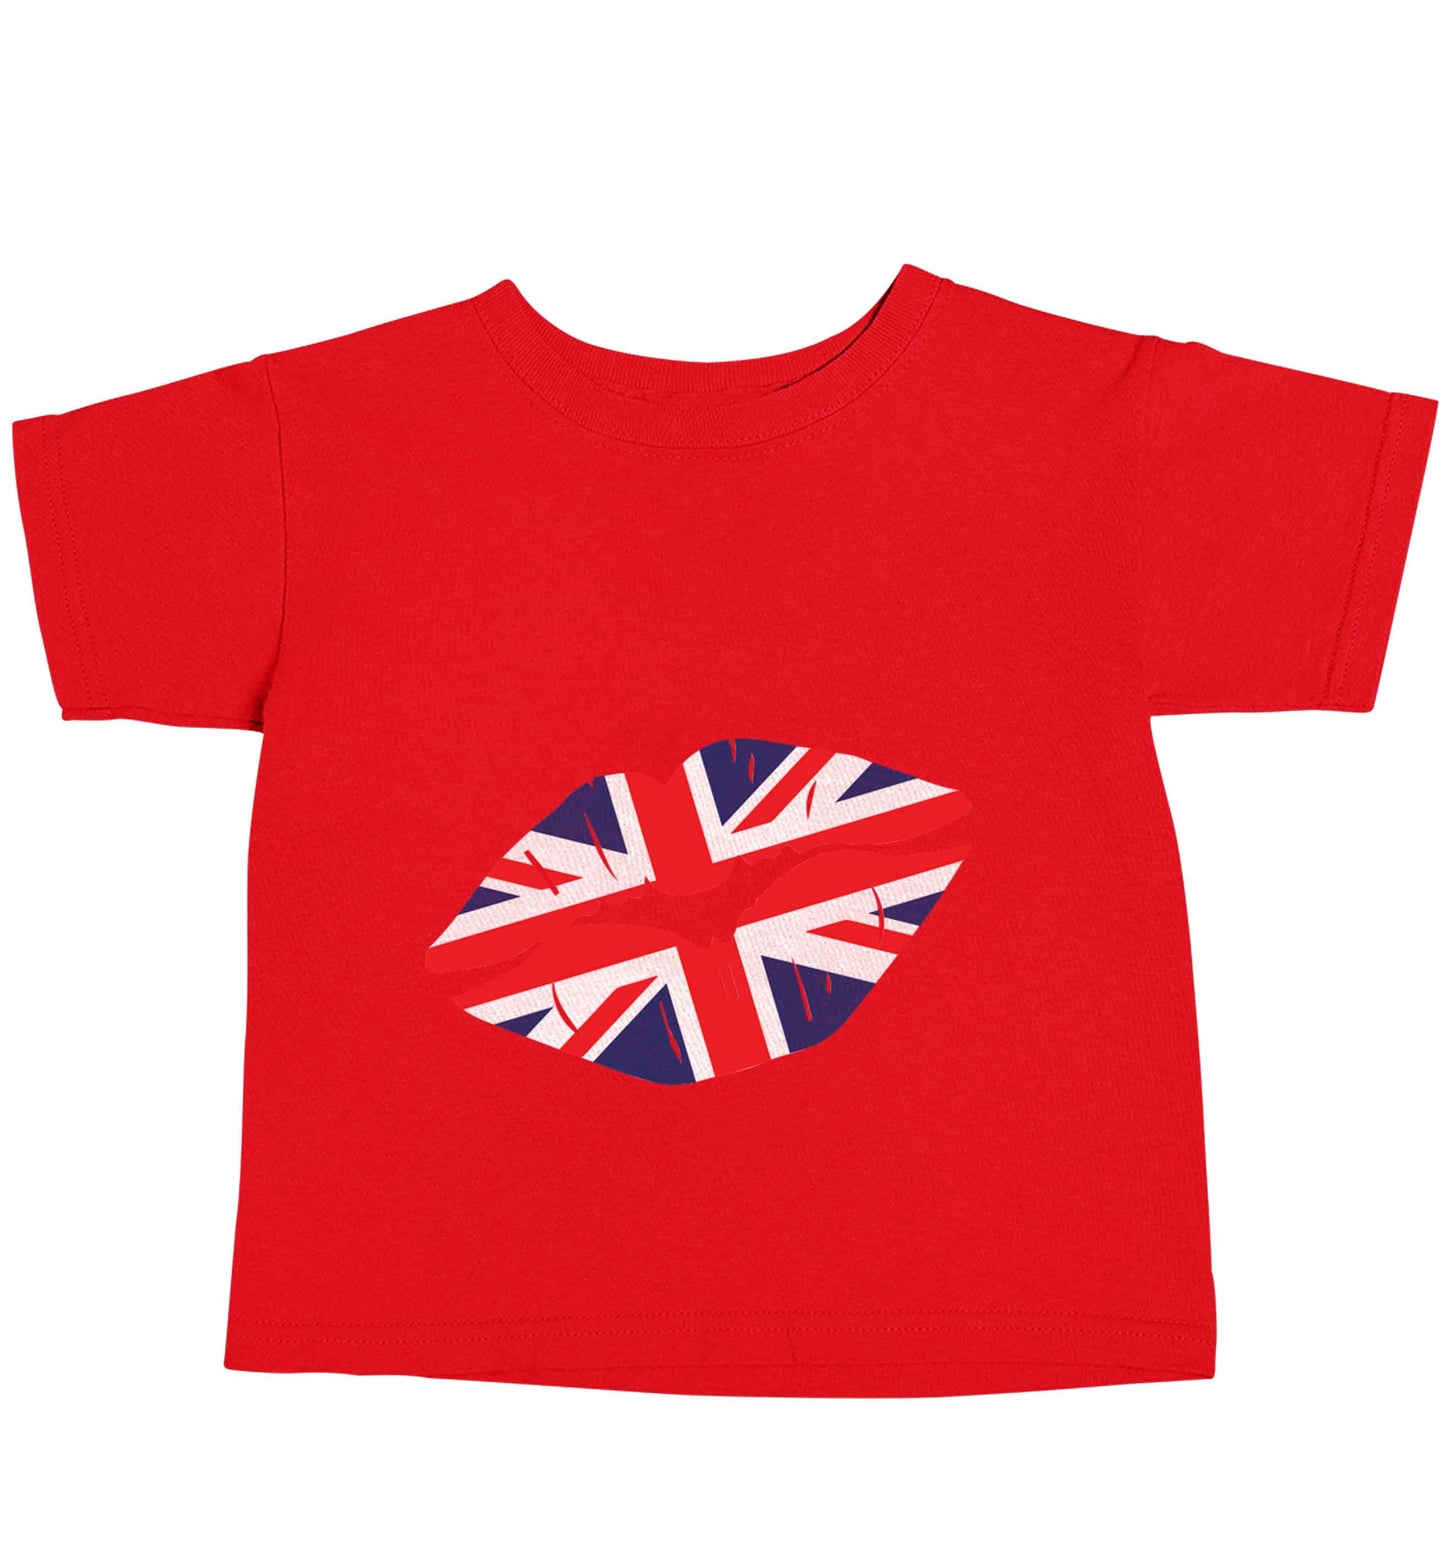 British flag kiss red baby toddler Tshirt 2 Years